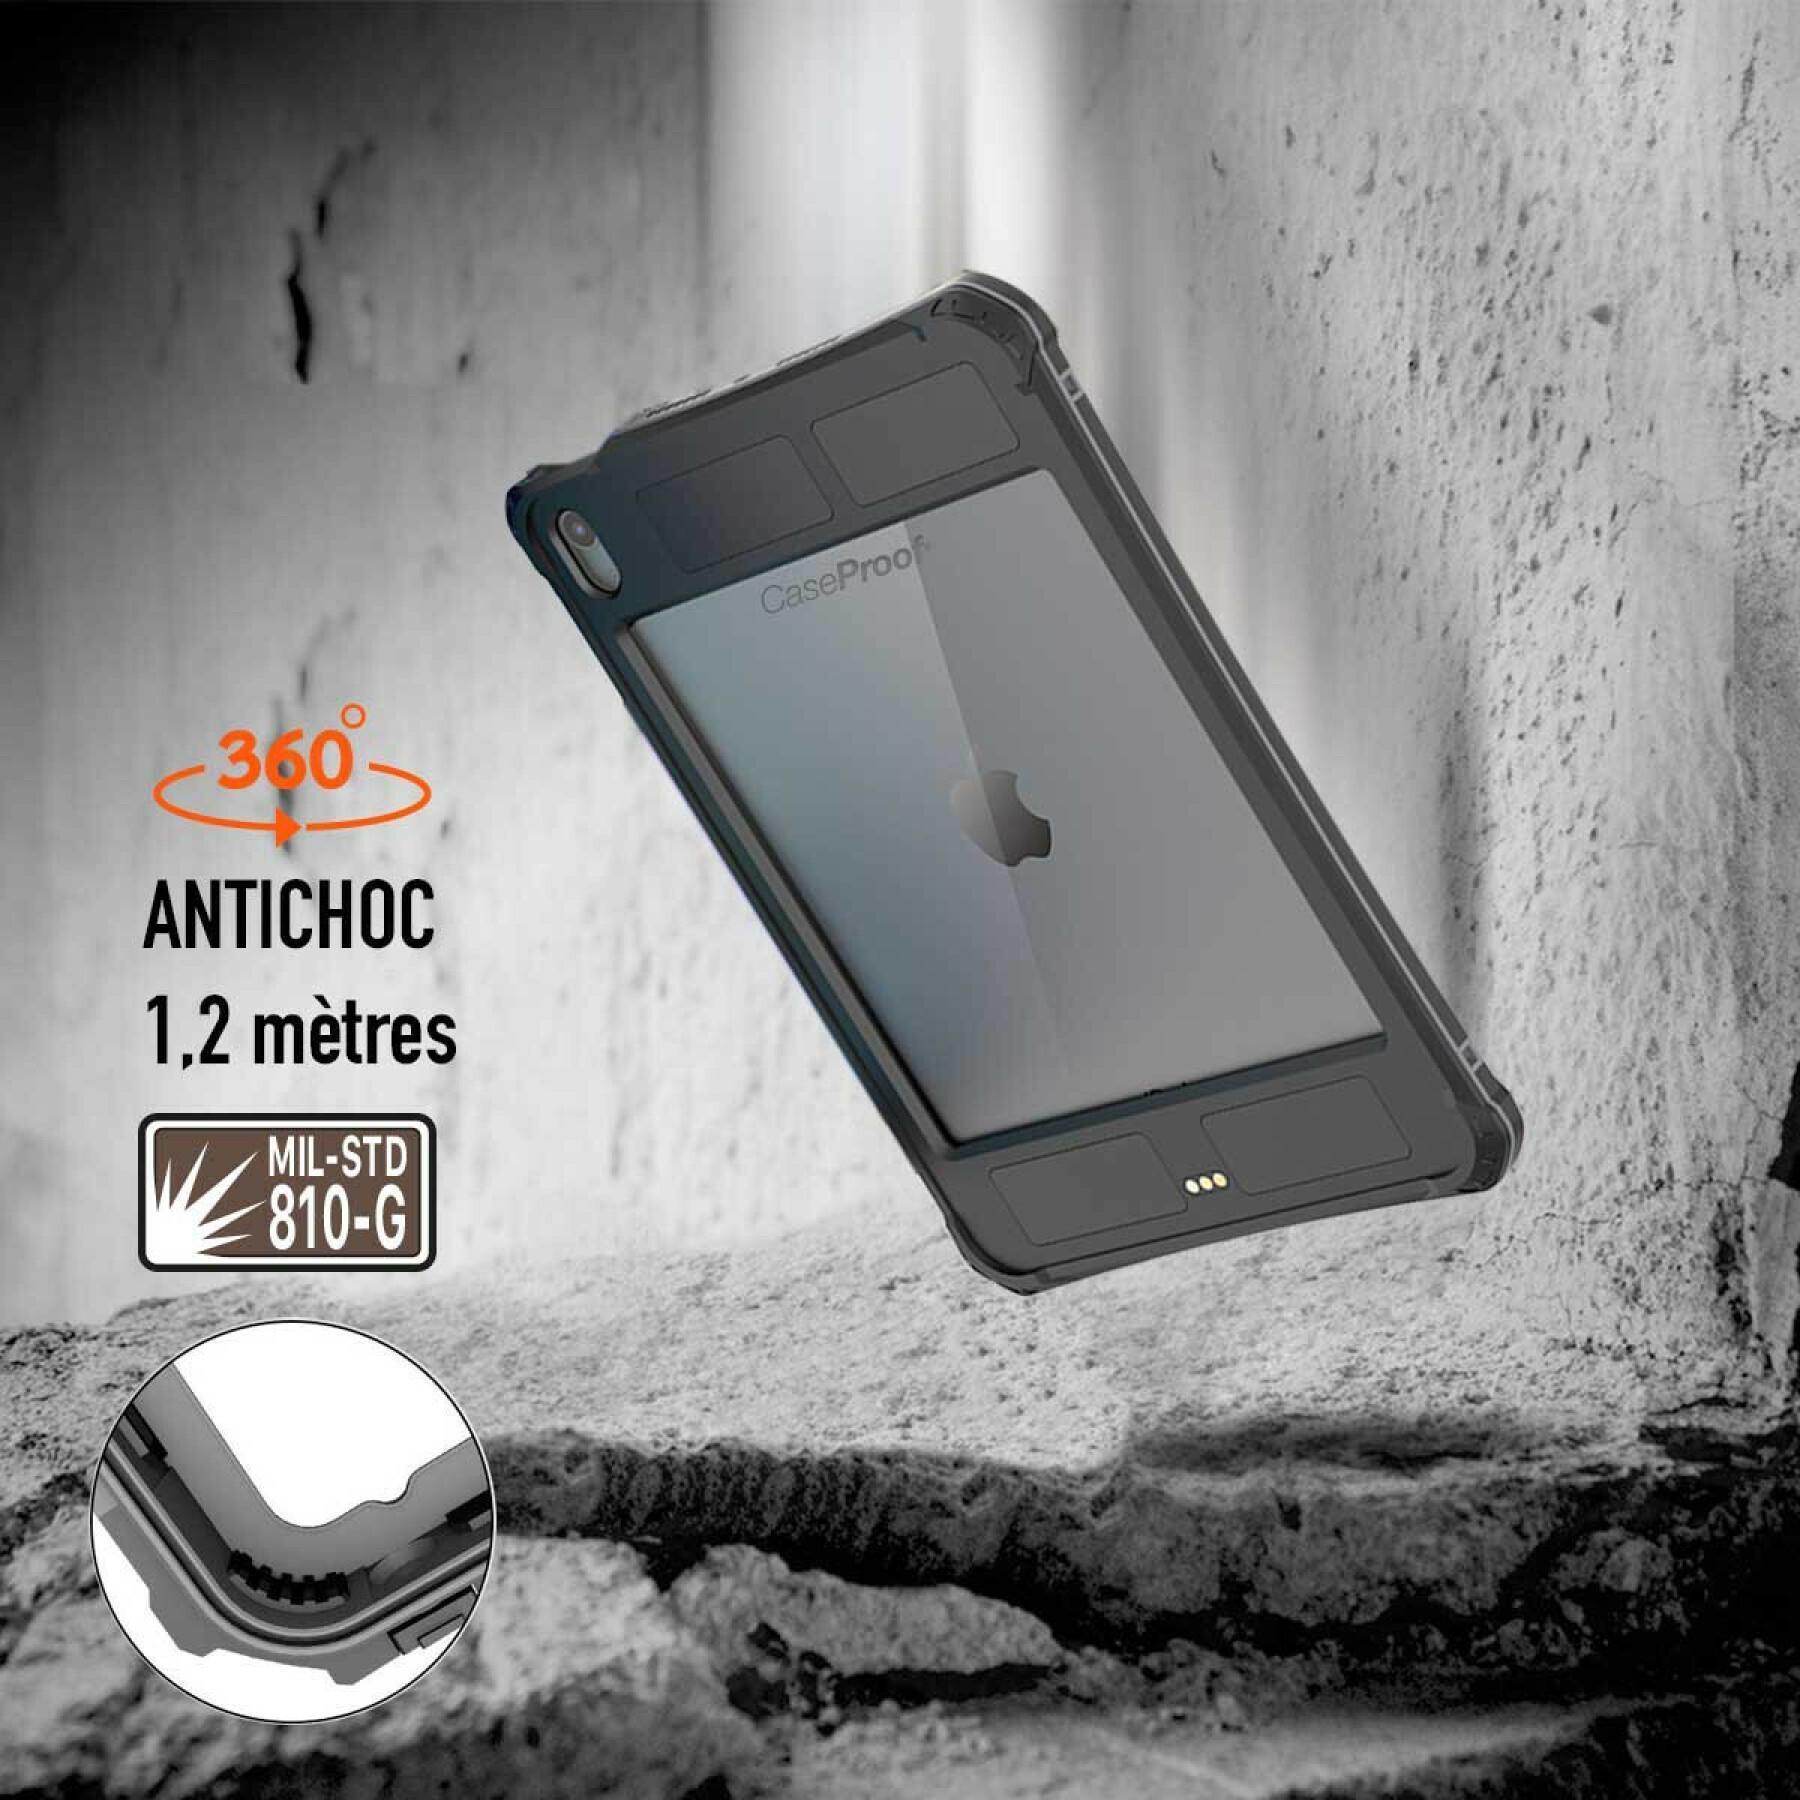 ipad air 5 /4 smartphone case waterproof and shockproof CaseProof